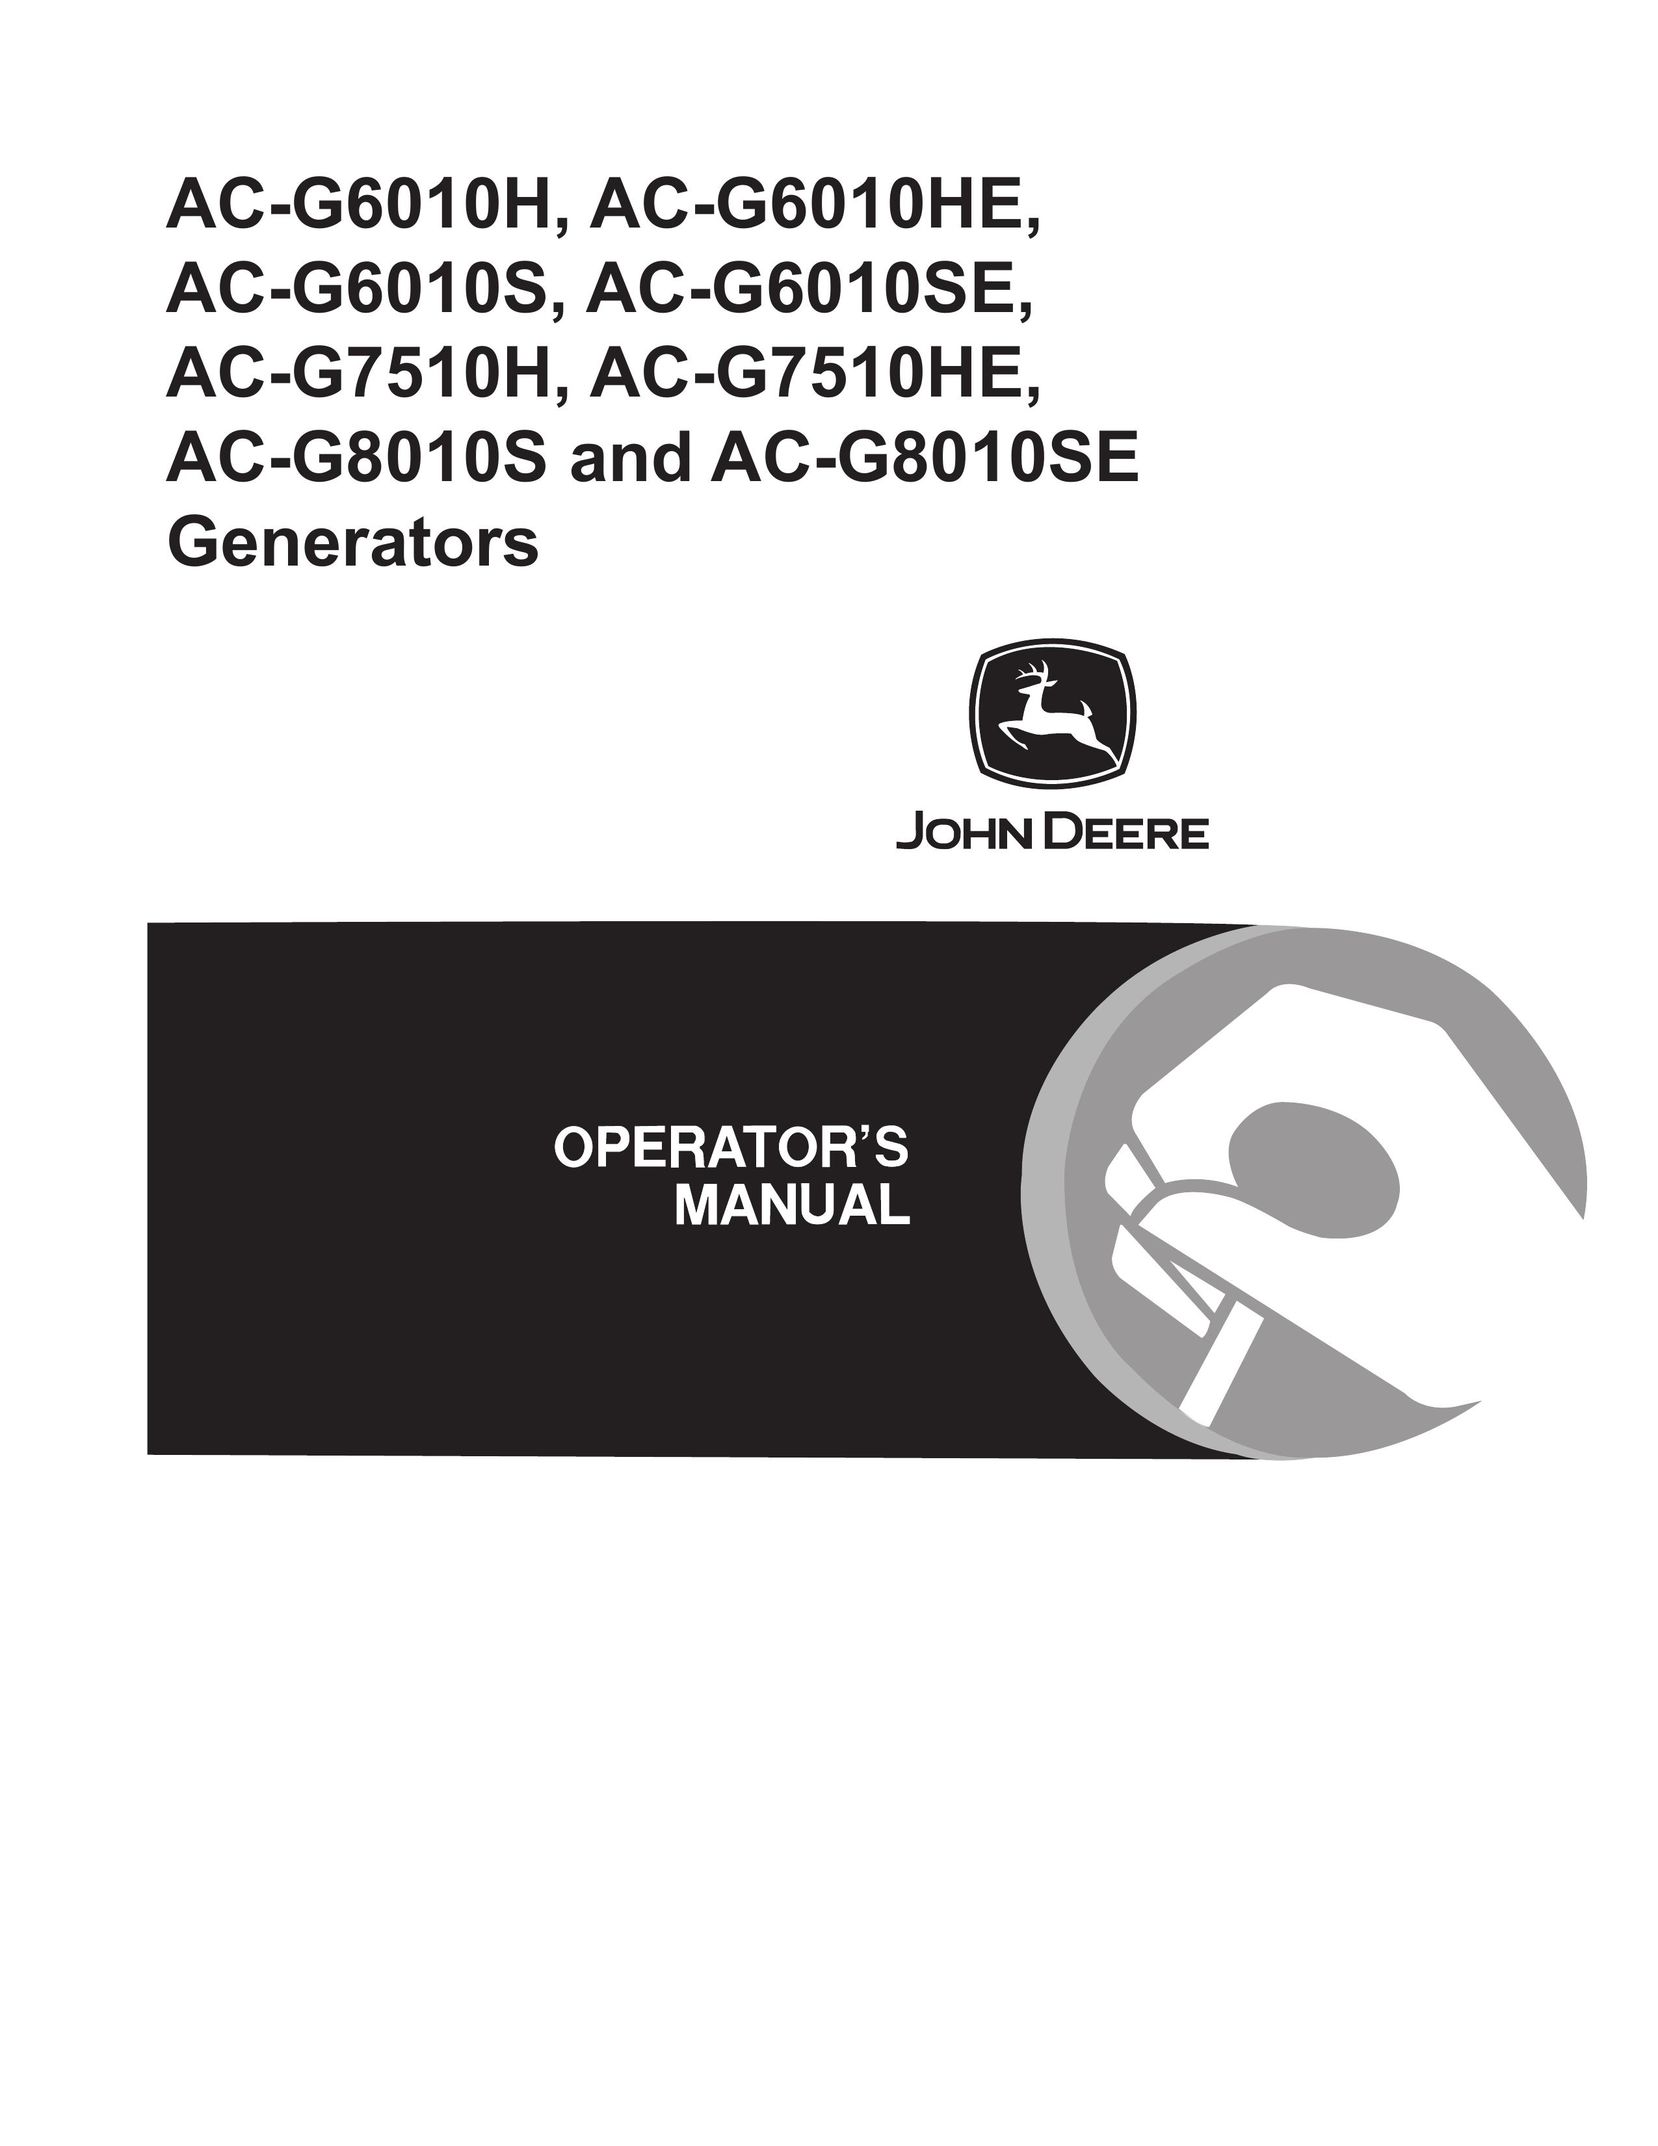 John Deere AC-G7510H Welding System User Manual